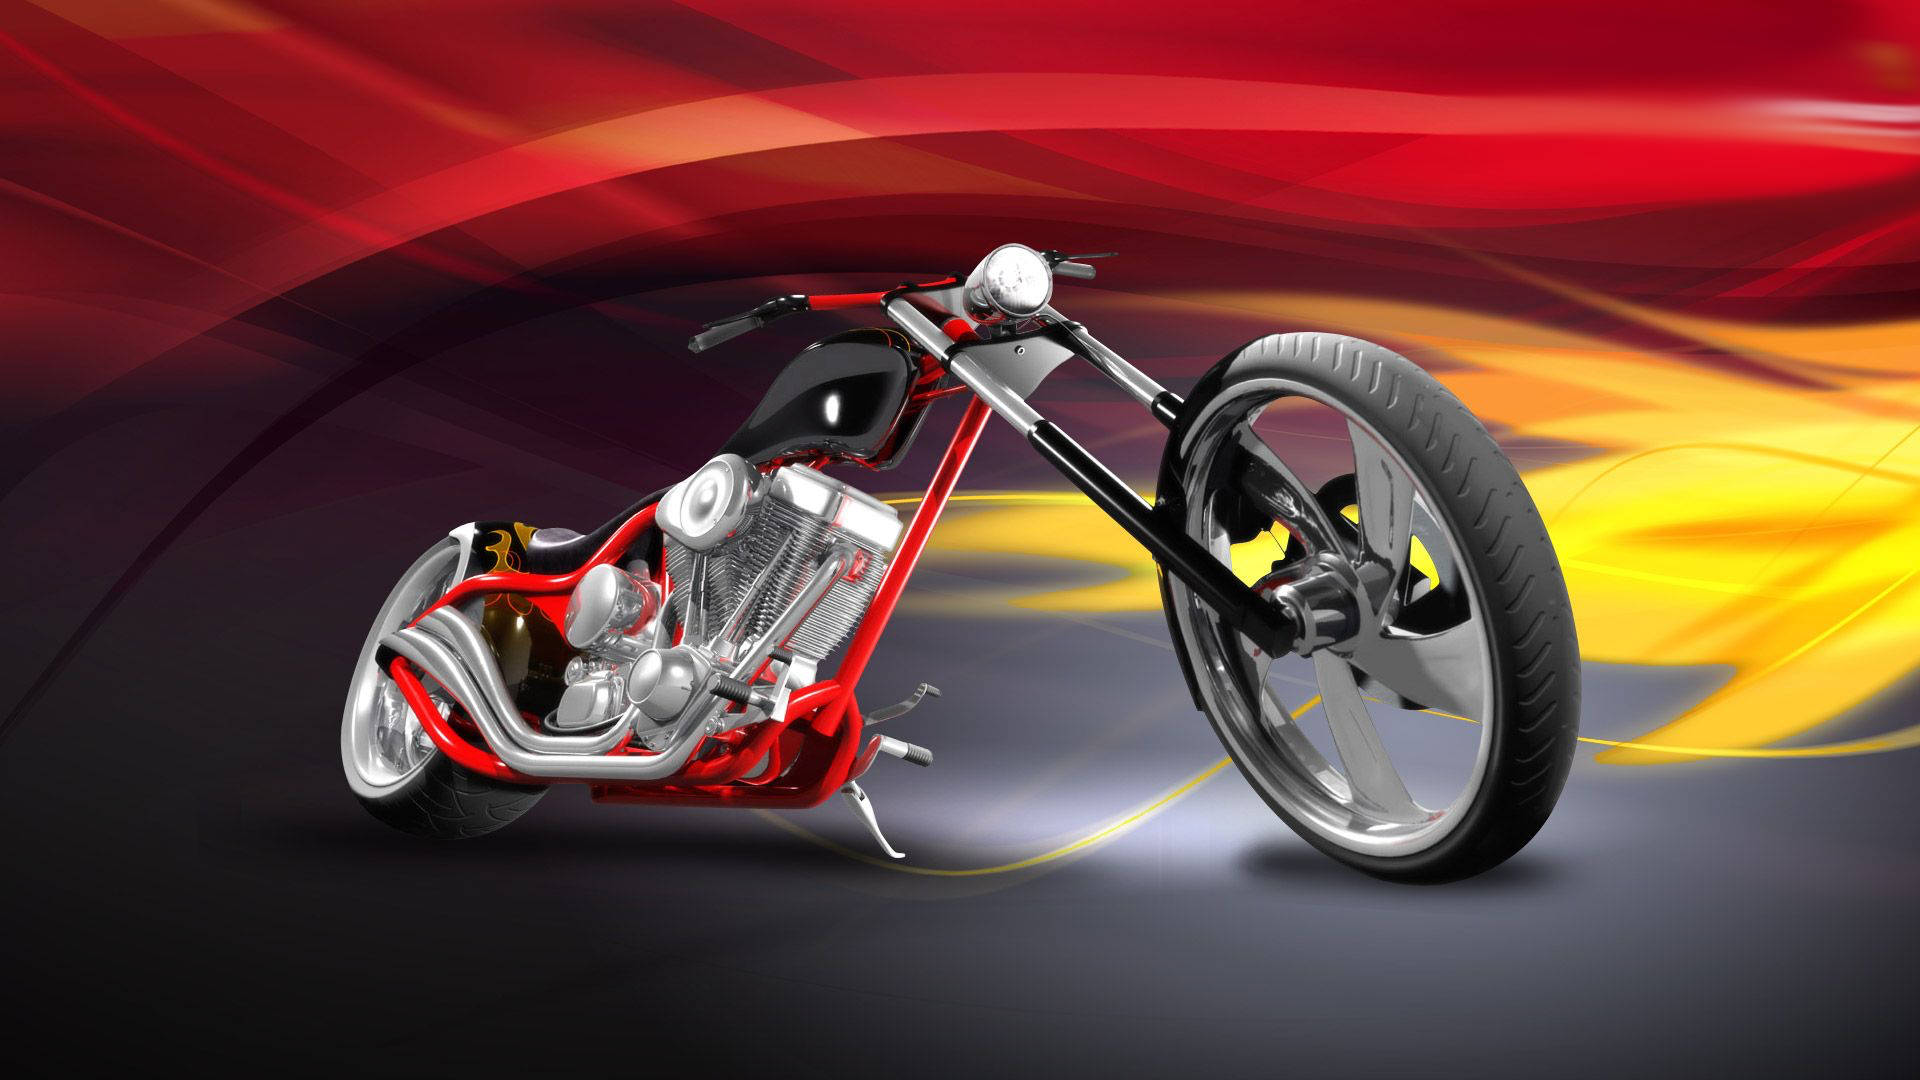 Chopper Motorcycle Digital Art Wallpaper